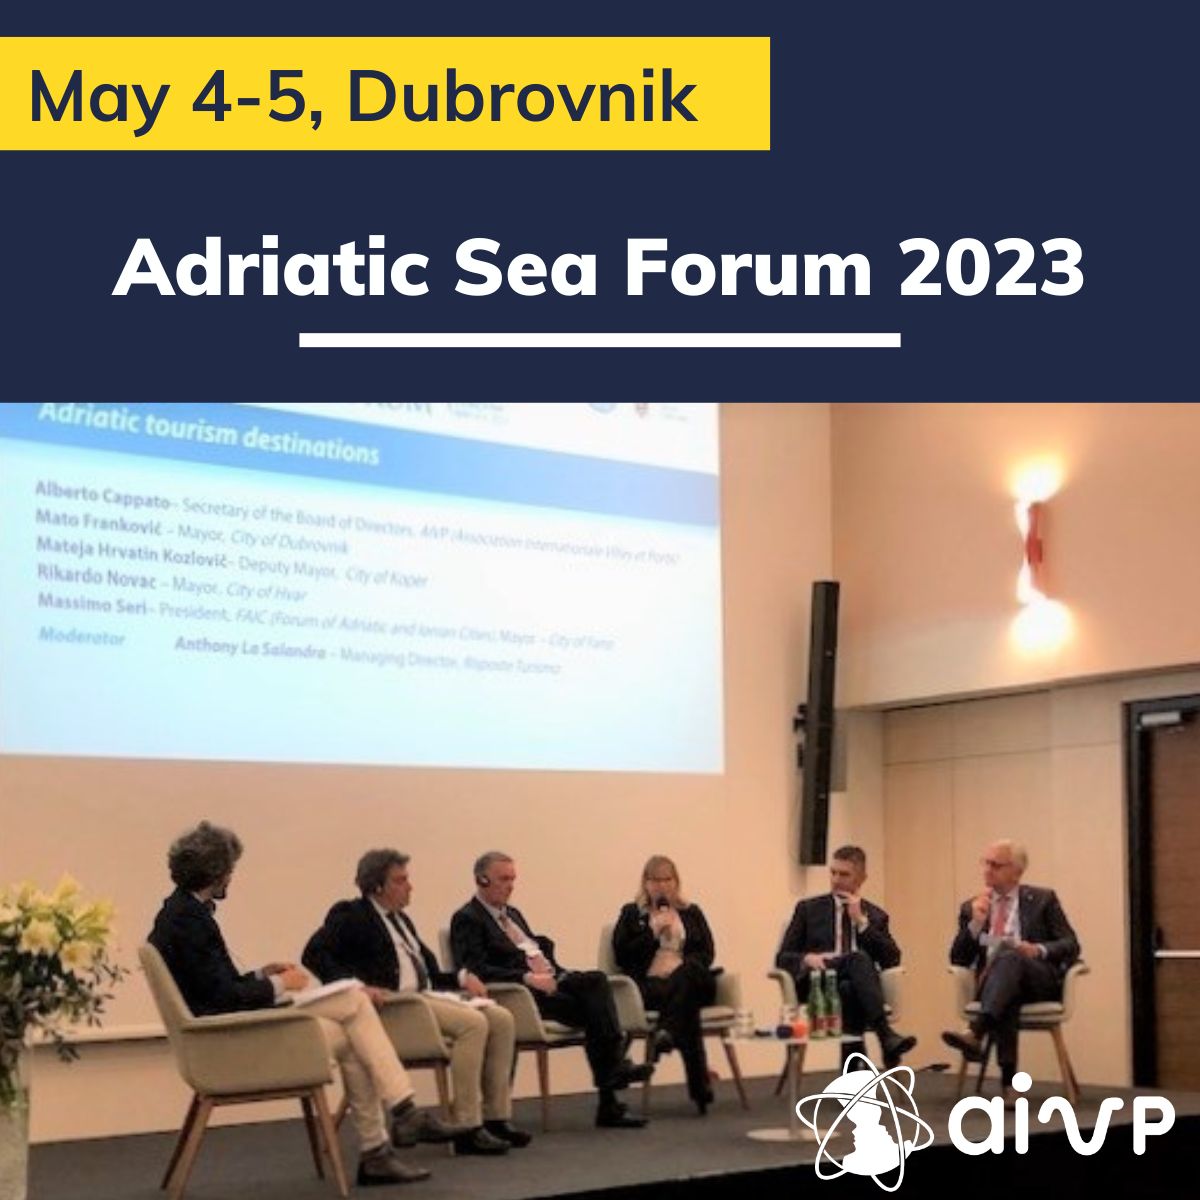 Alberto Cappato @aktogenova, Secretary of the Board of Directors, AIVP was at @AdriatiSeaForum for a debate about Adriatic tourism destinations

➕ swll.to/0L24fxi